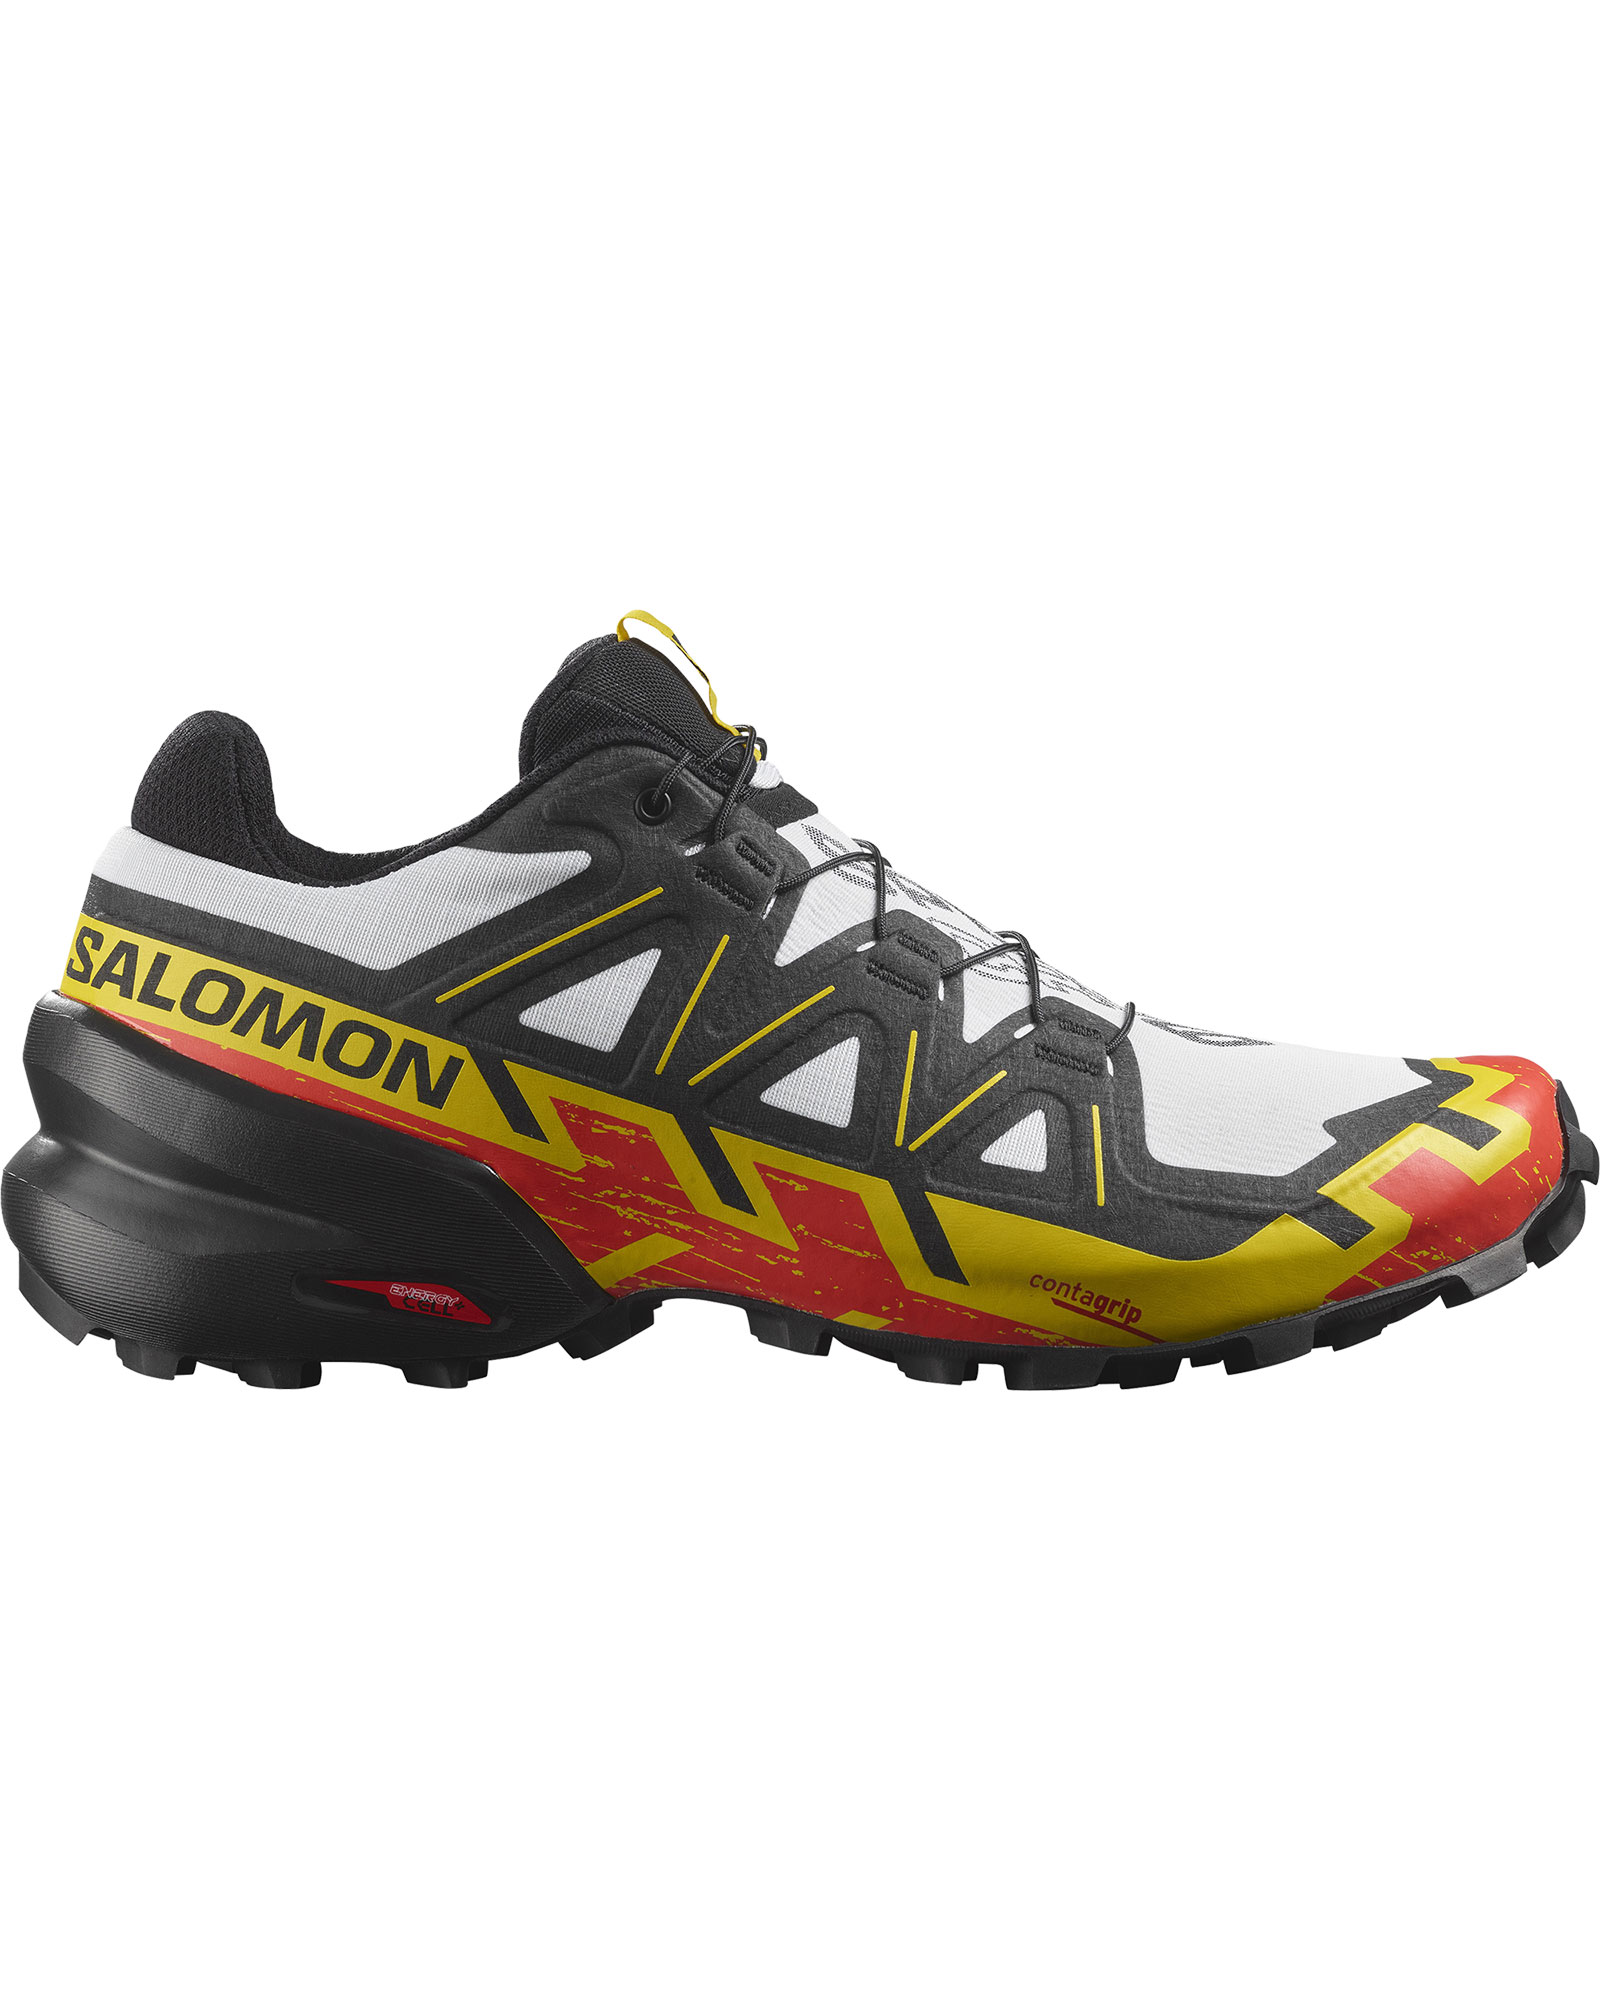 Salomon Speedcross 6 Men’s Shoes - White/Black/Empire Yellow UK 11